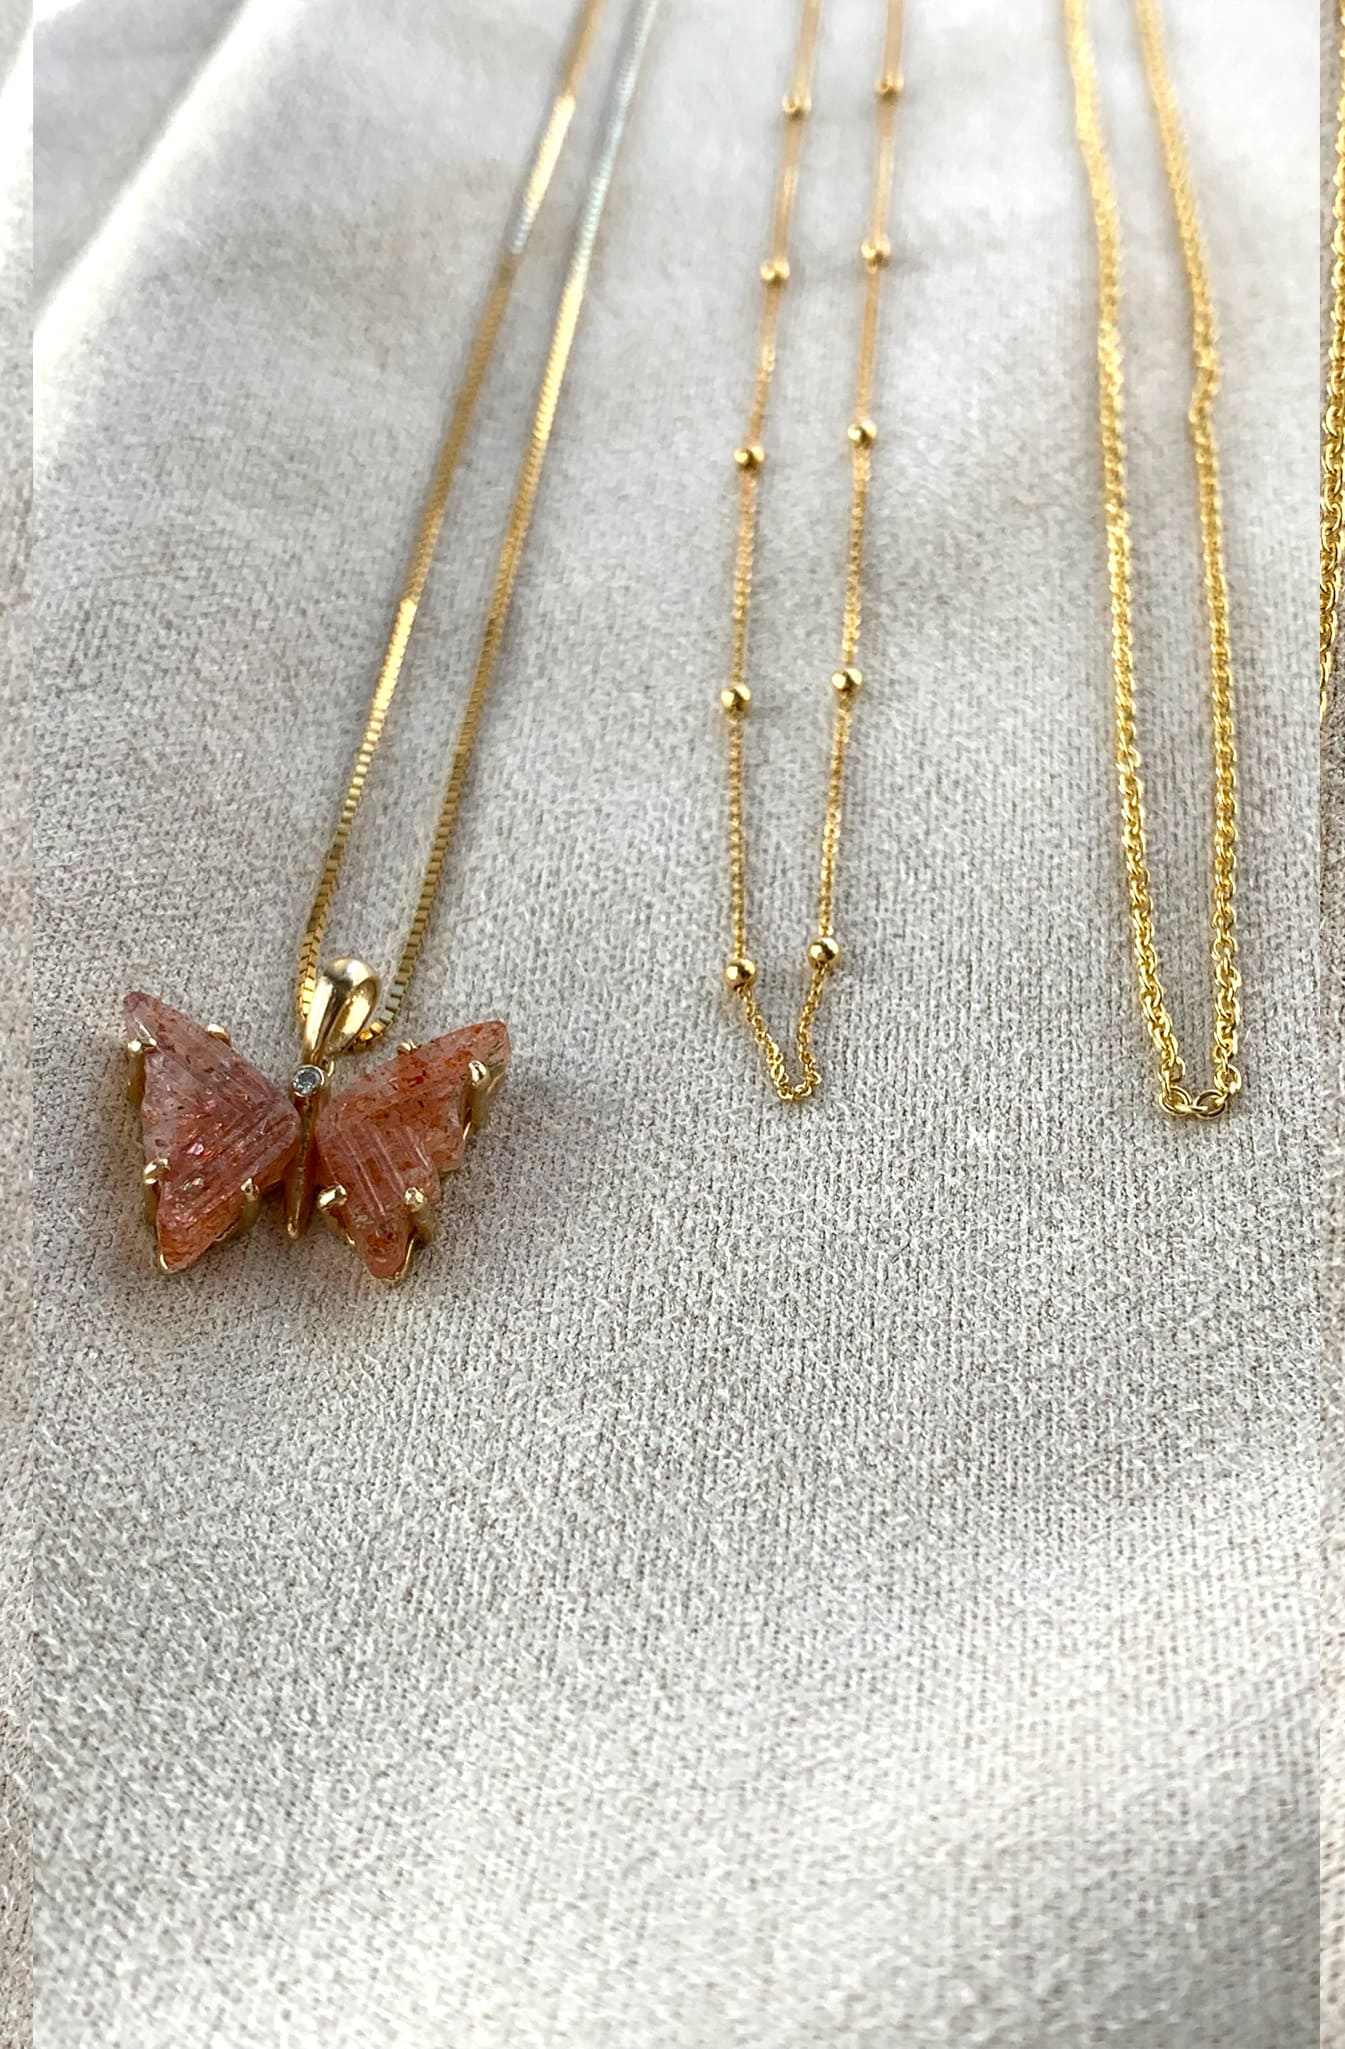 Handmade Gold Sunstone and Diamond Butterfly Pendant